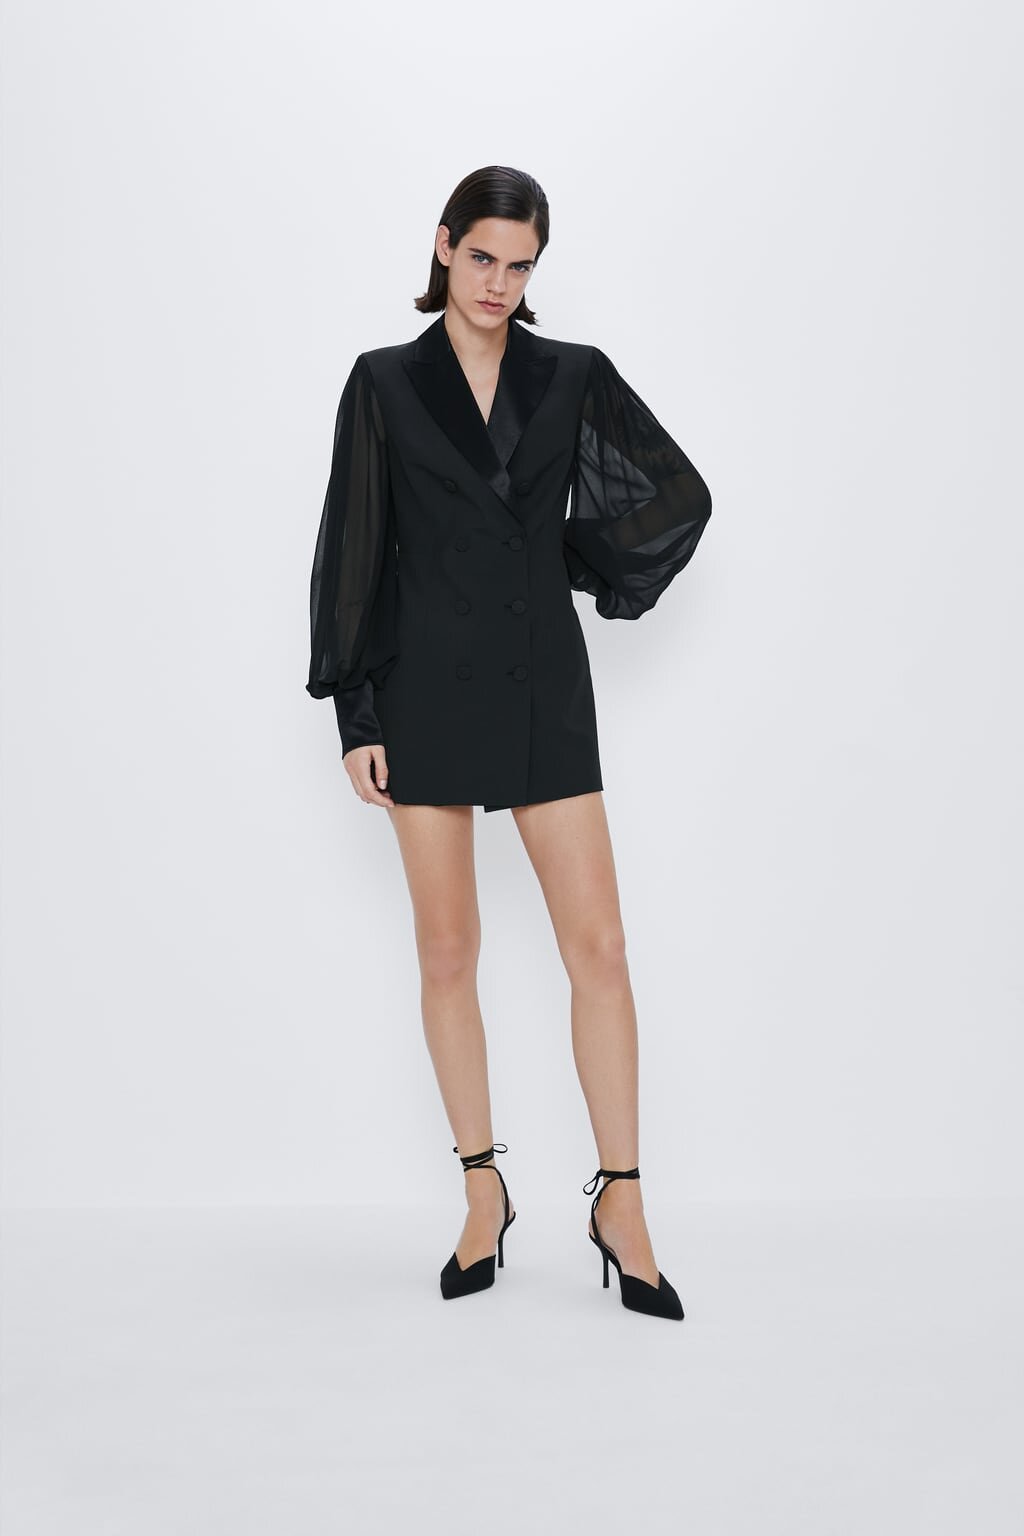 Combination Sleeve Blazer Dress, $149